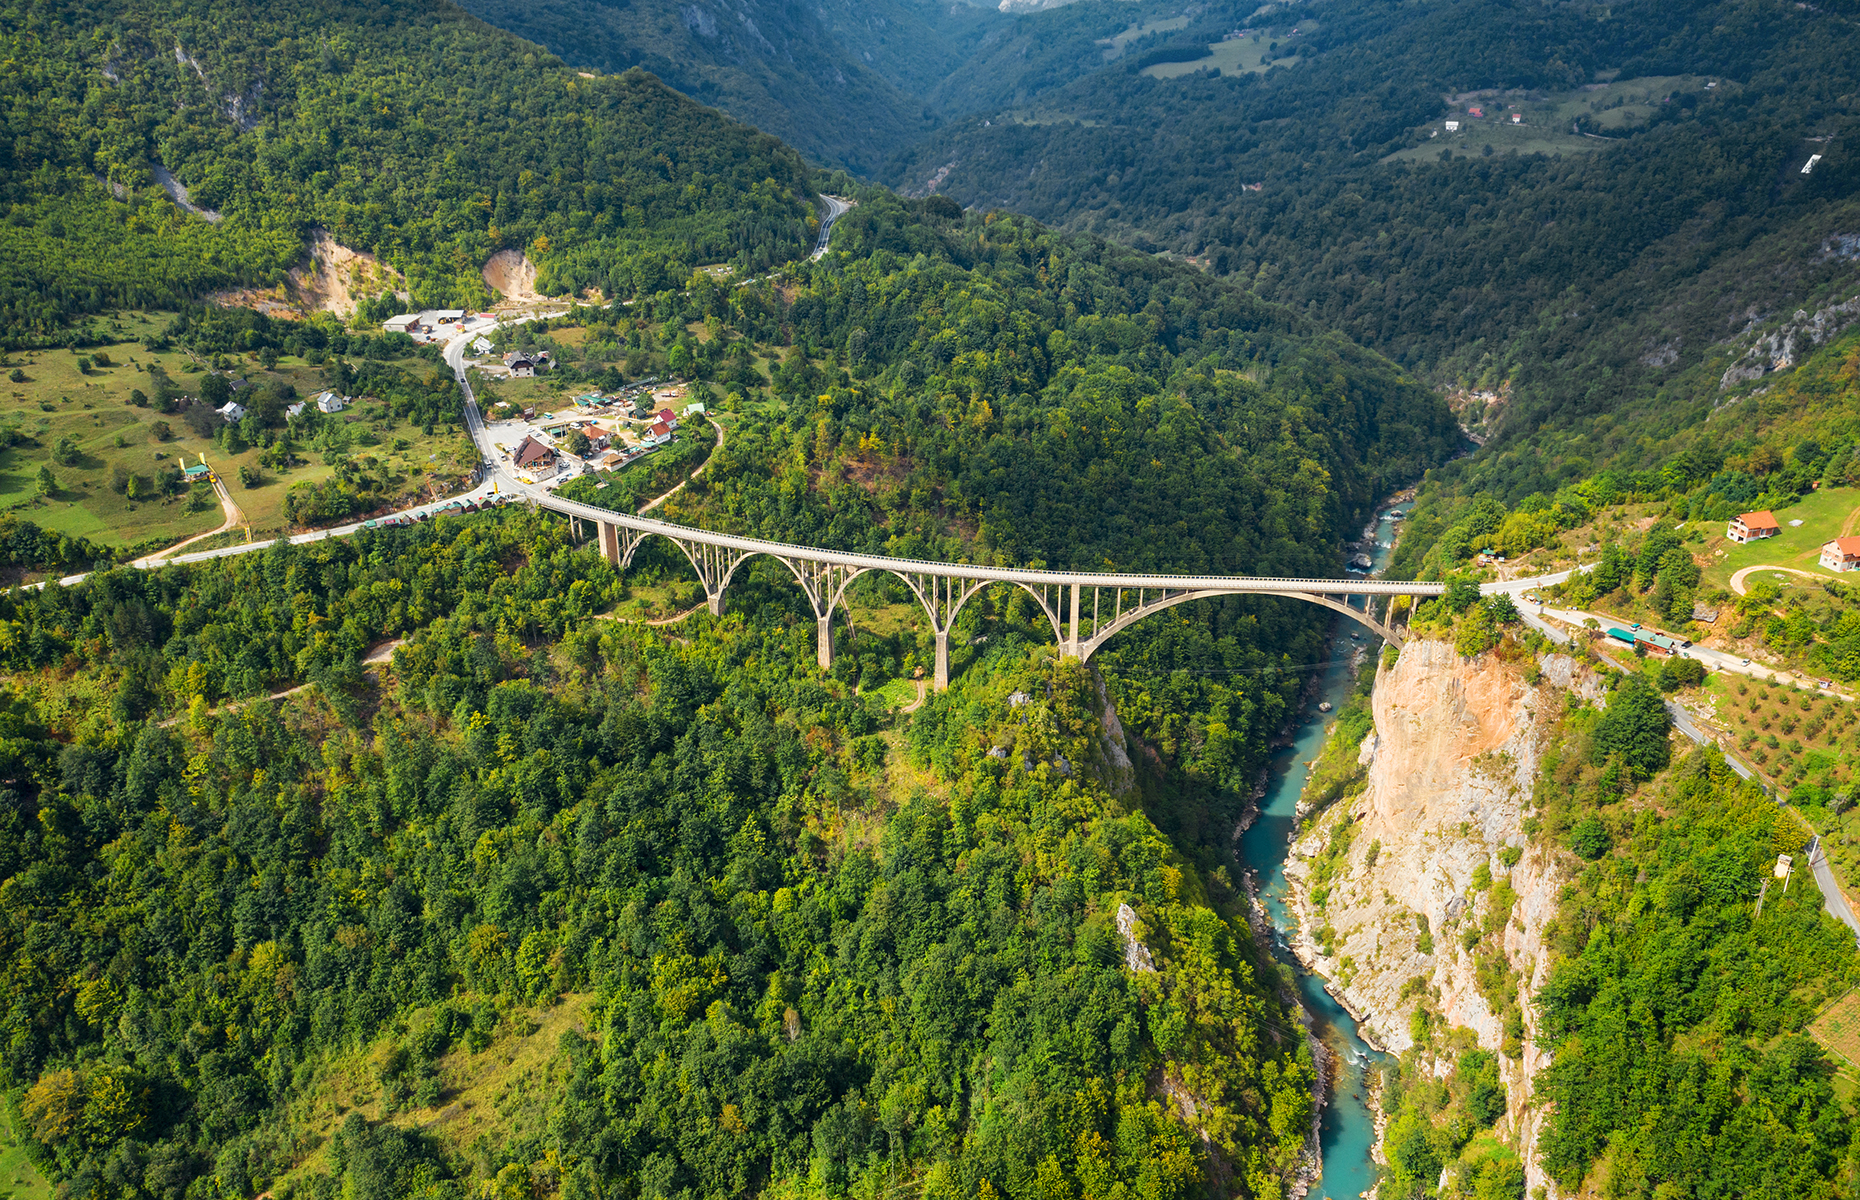 Tara River Canyon, Montenegro. (Image: S. Tatiana/Shutterstock)